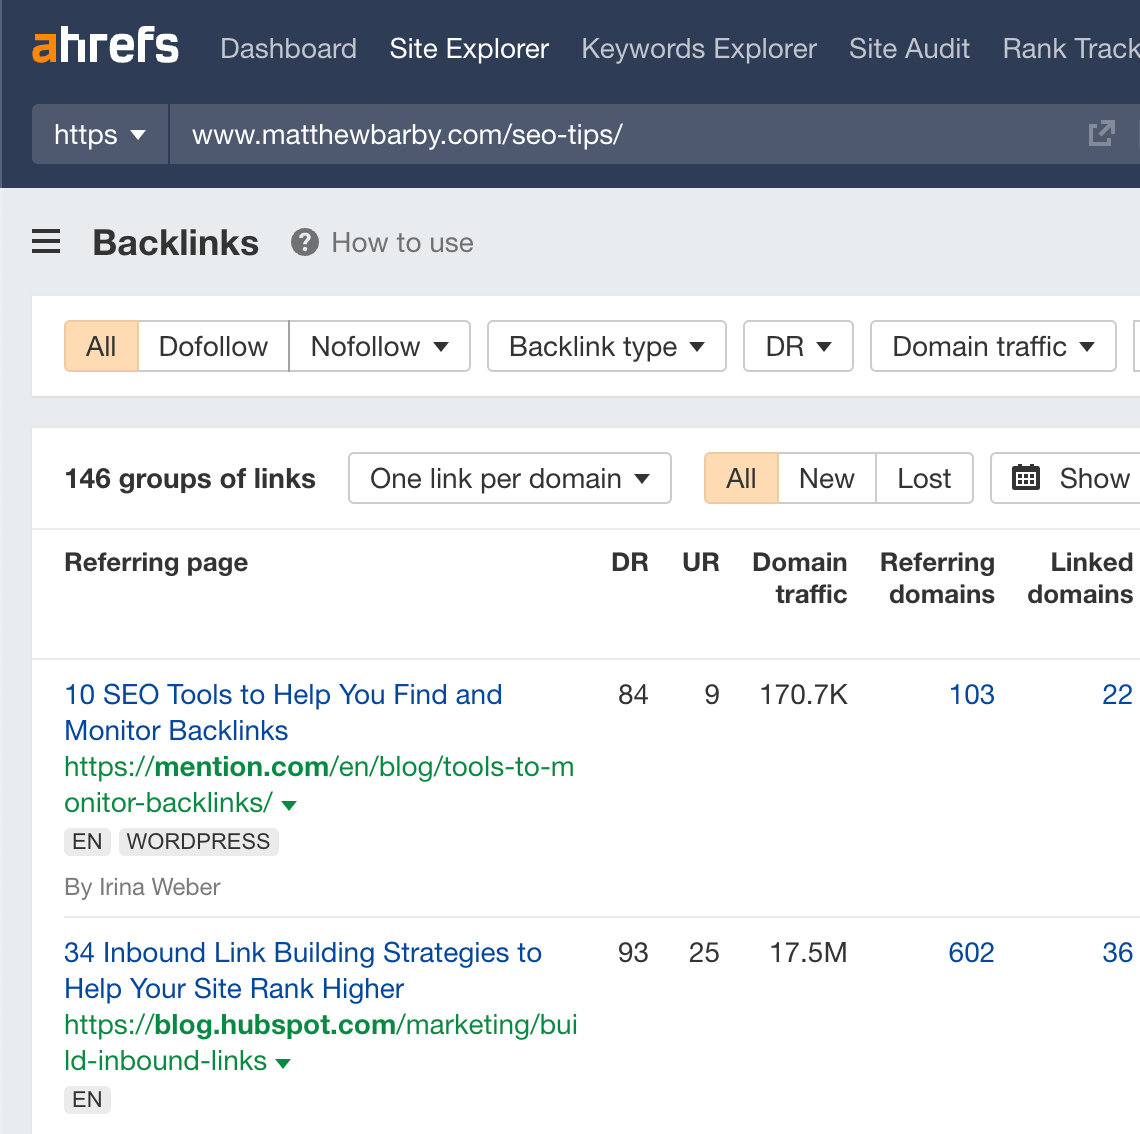 Backlinks to the broken page via Ahrefs' Site Explorer